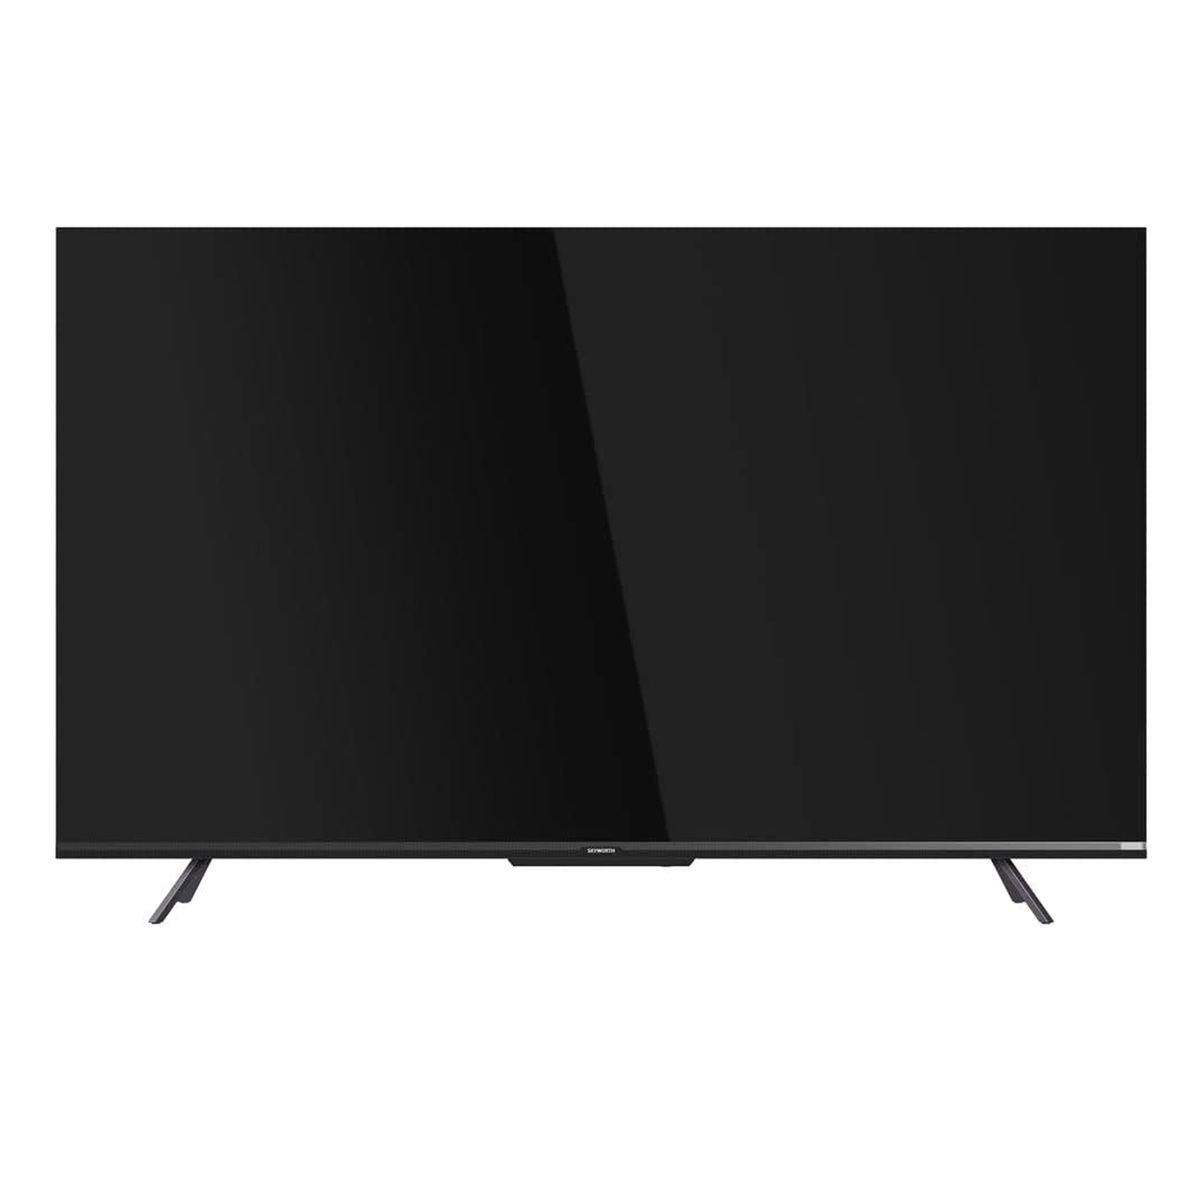 Skyworth 75 inches 4K UHD Smart LED TV, Black, 75SUD9350F